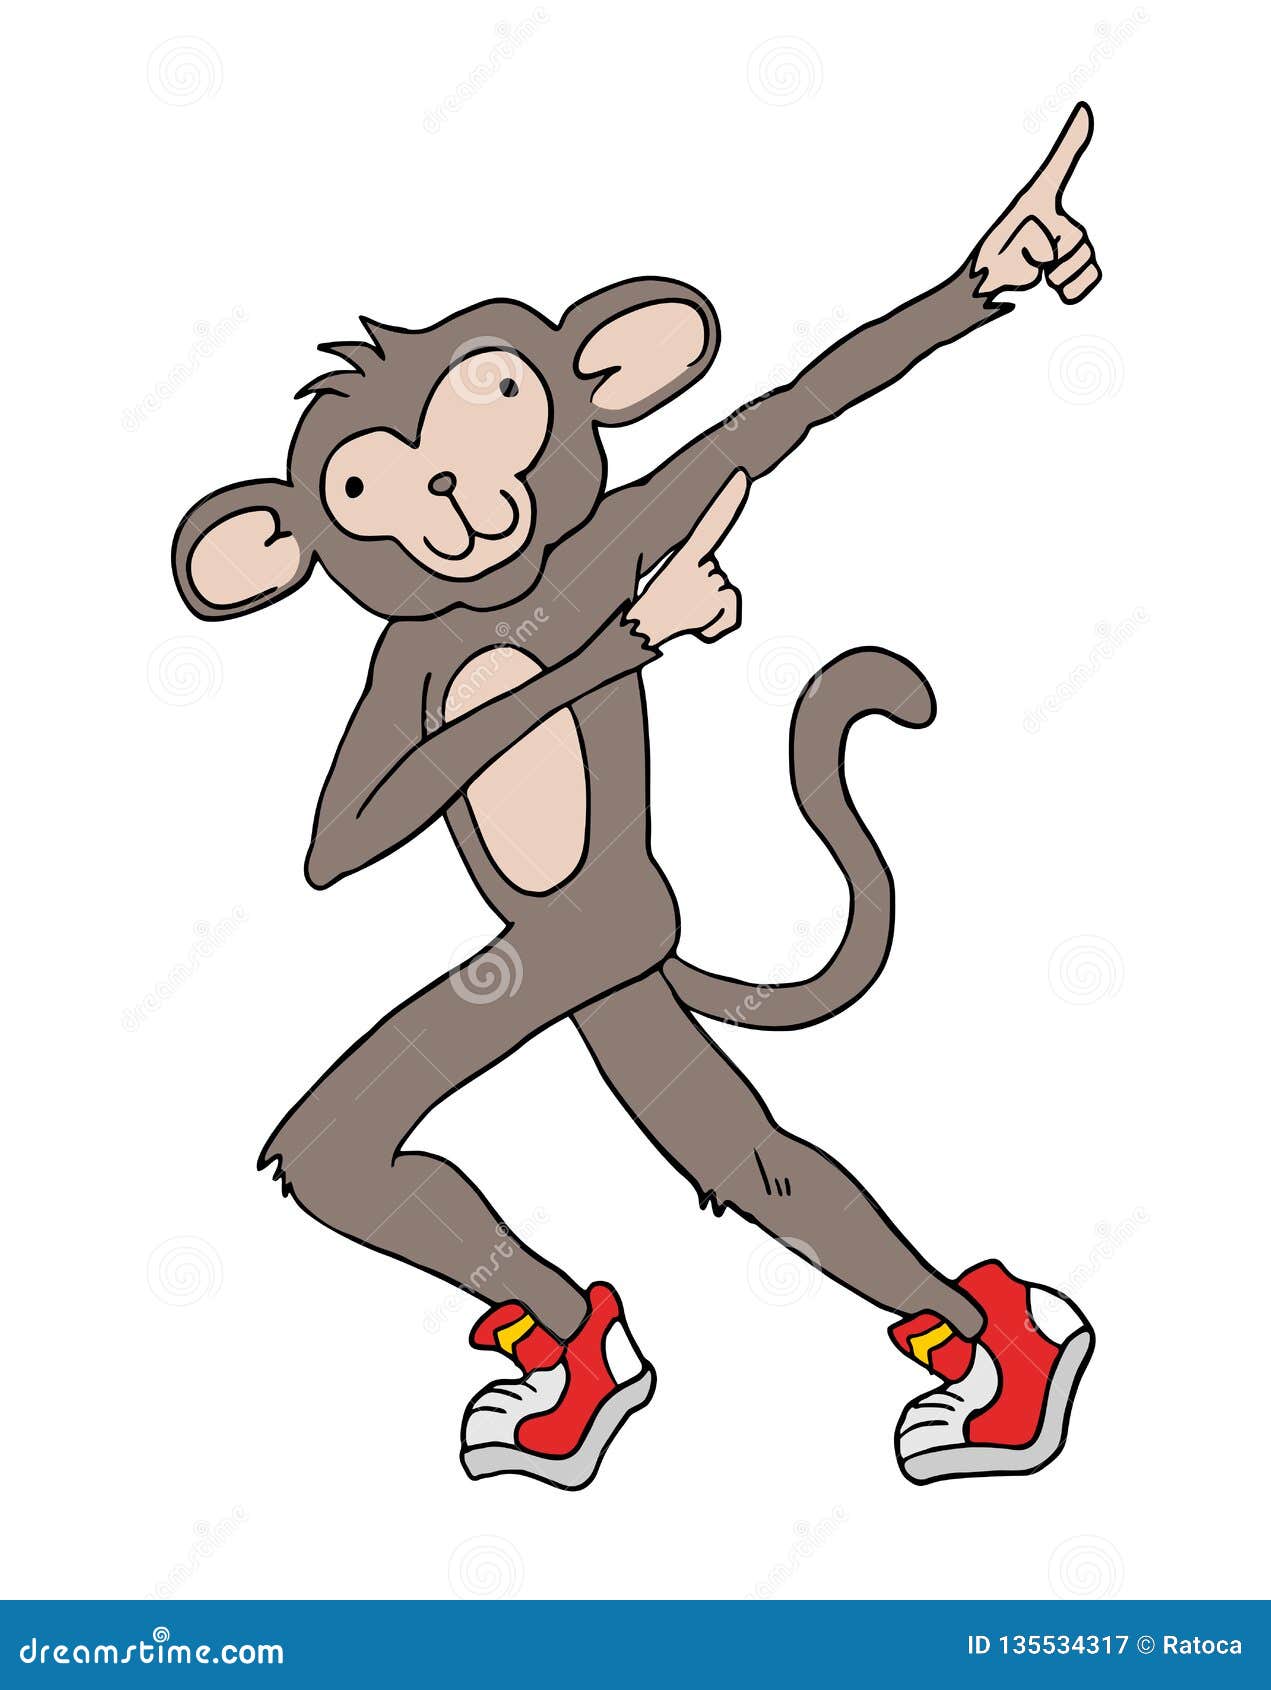 Dancing Monkey Illustration Stock Illustration Illustration Of